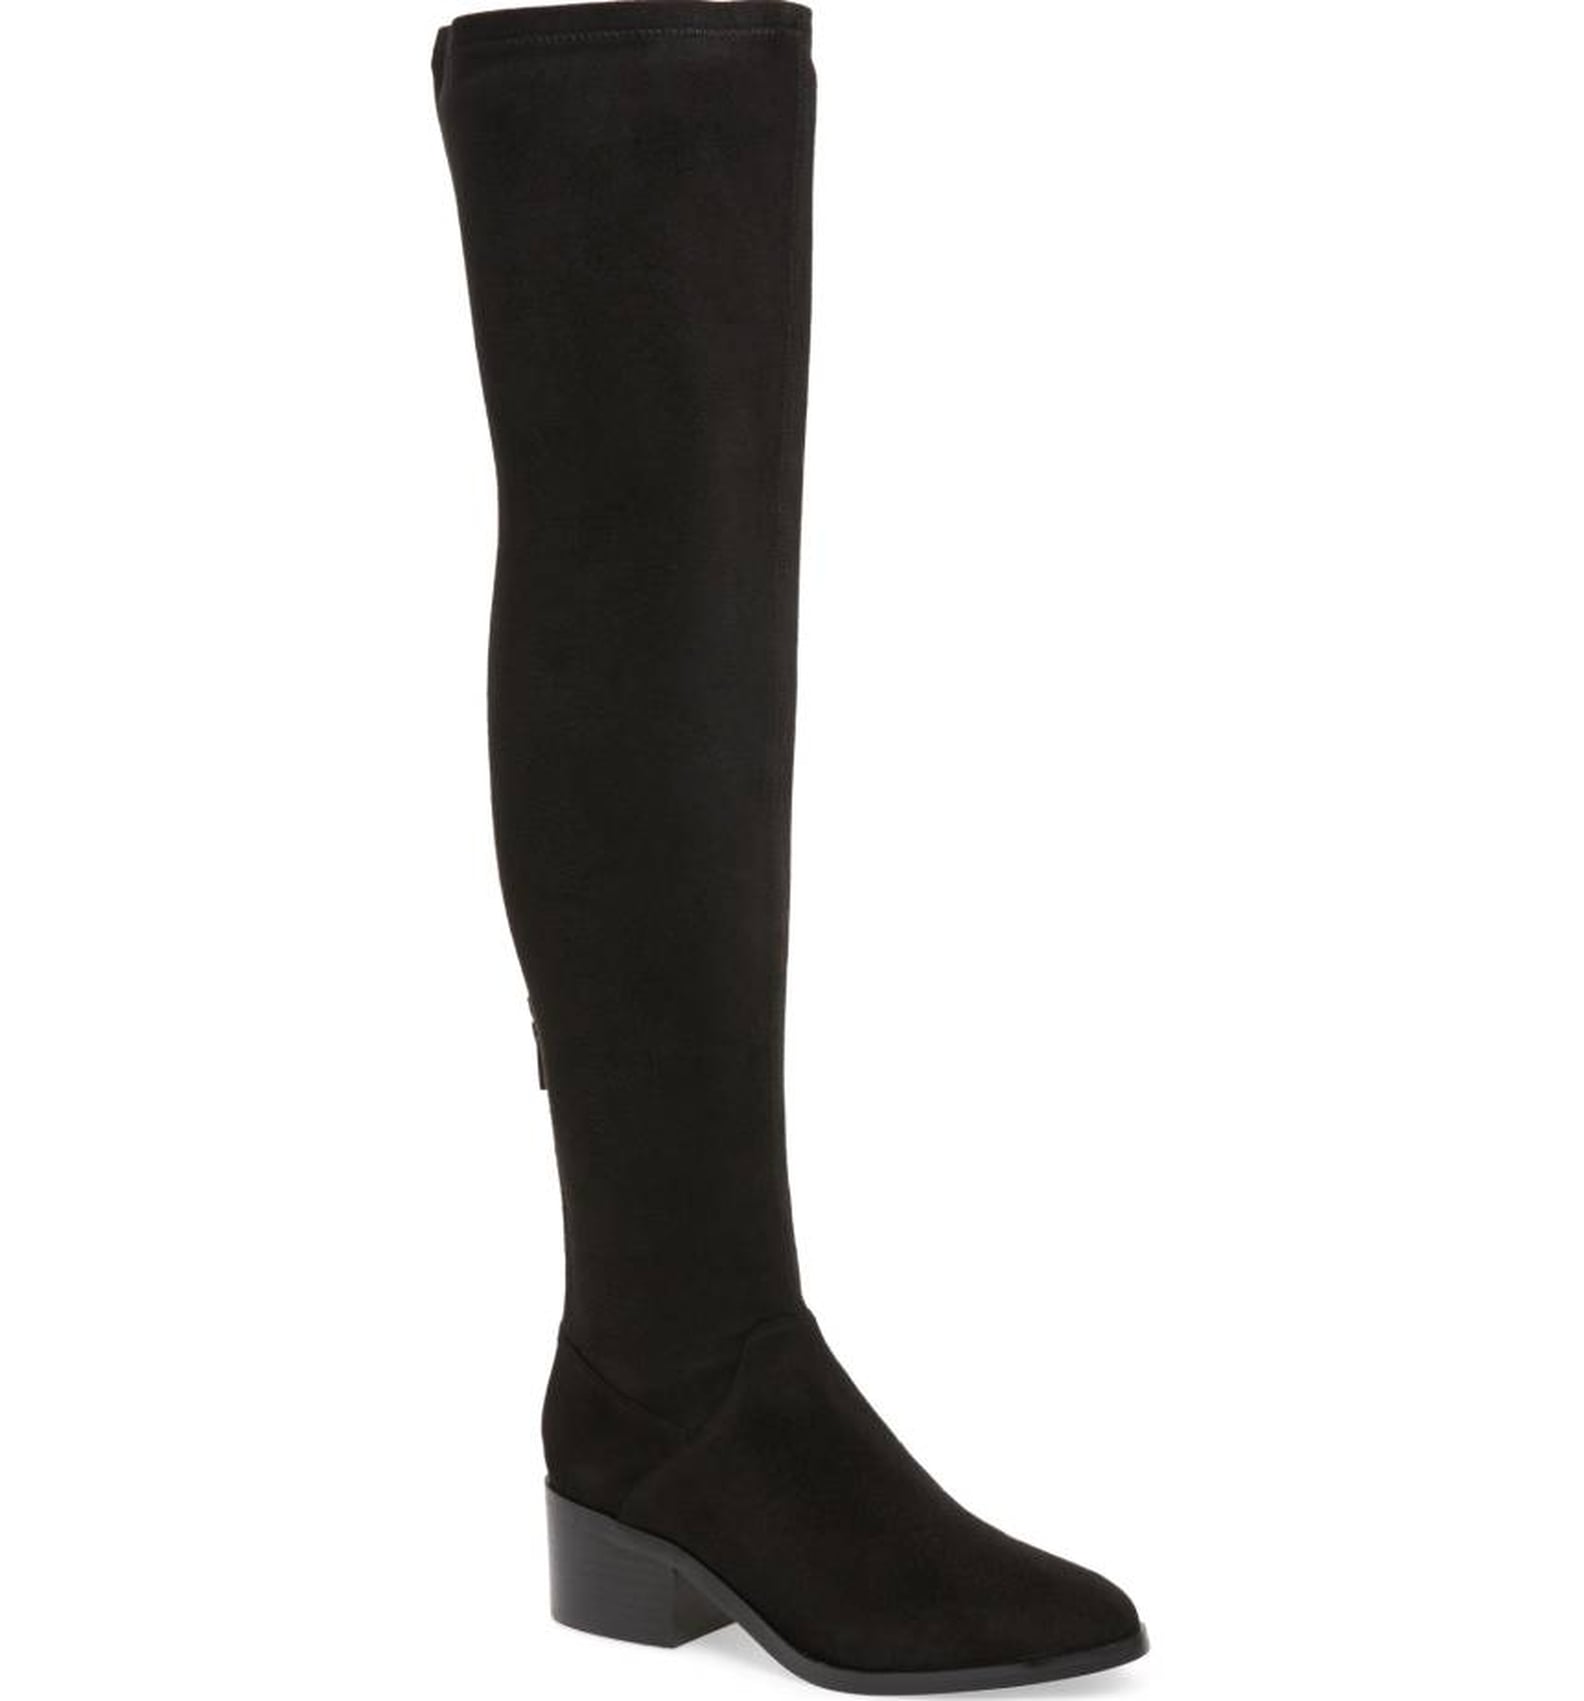 Angelina Jolie Wearing Black Suede Boots | POPSUGAR Fashion